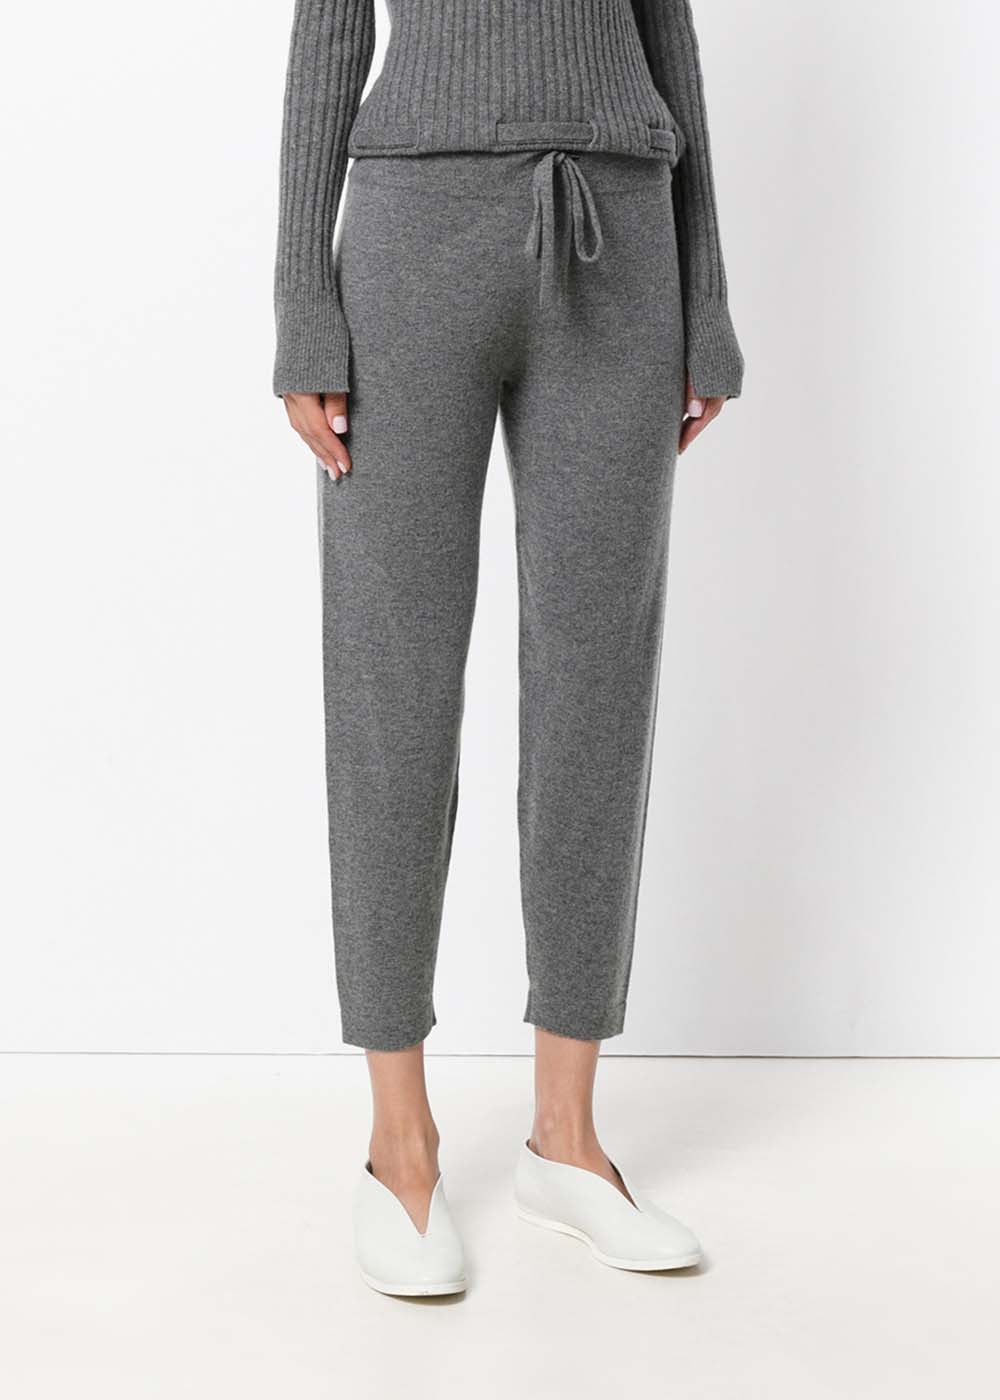 Sarah Knit Trousers - Large / Ash Grey